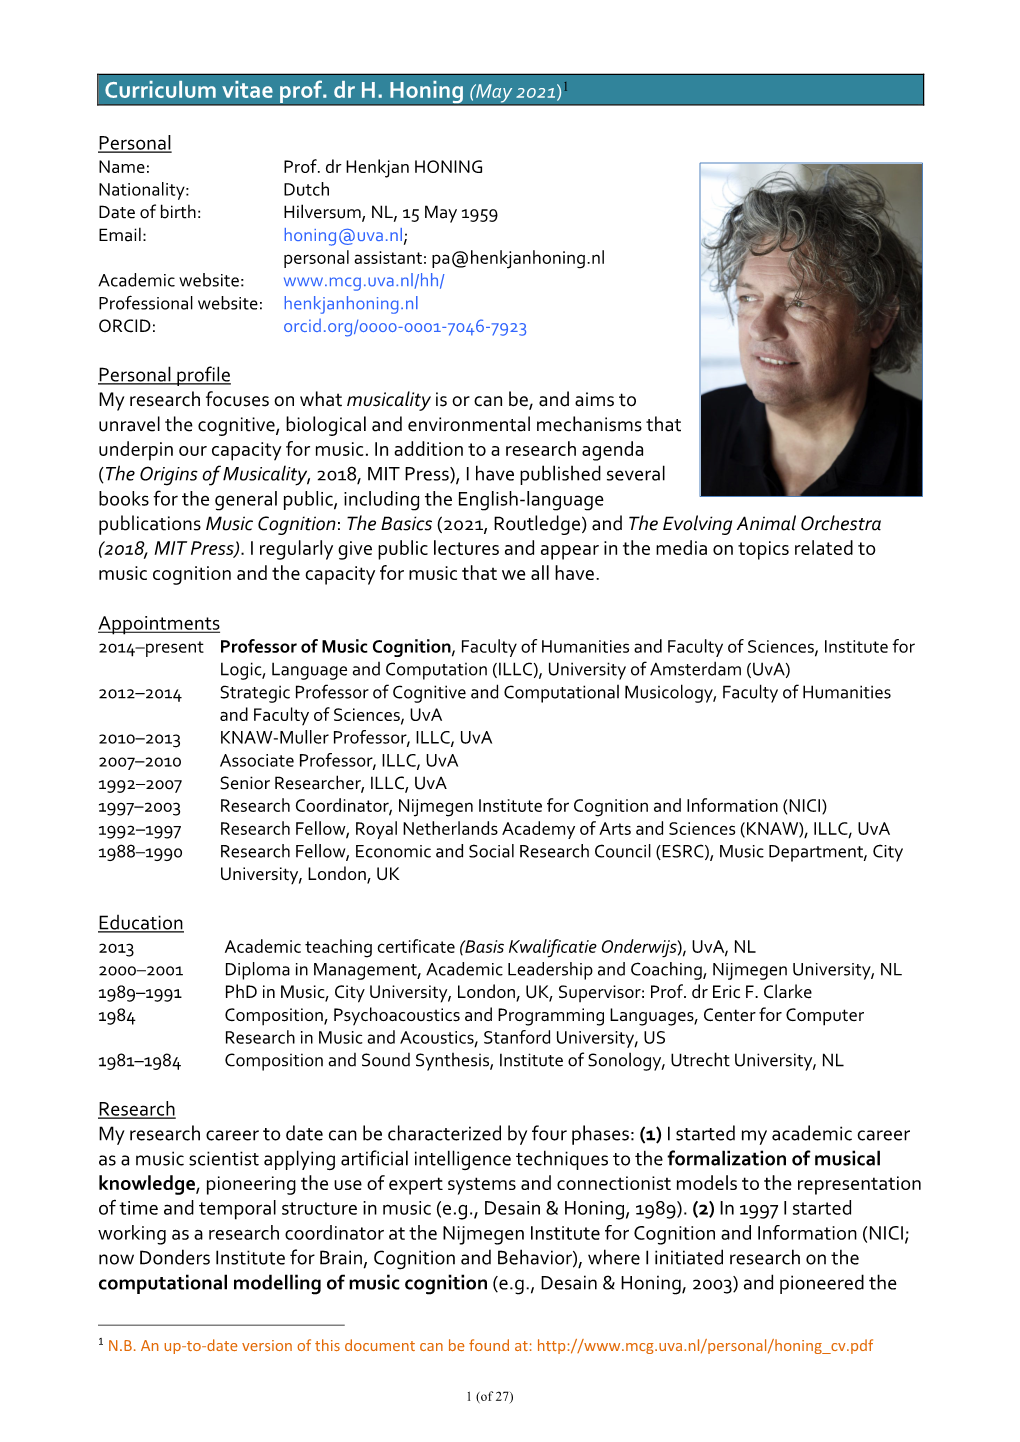 Curriculum Vitae Prof. Dr H. Honing (May 2021)1